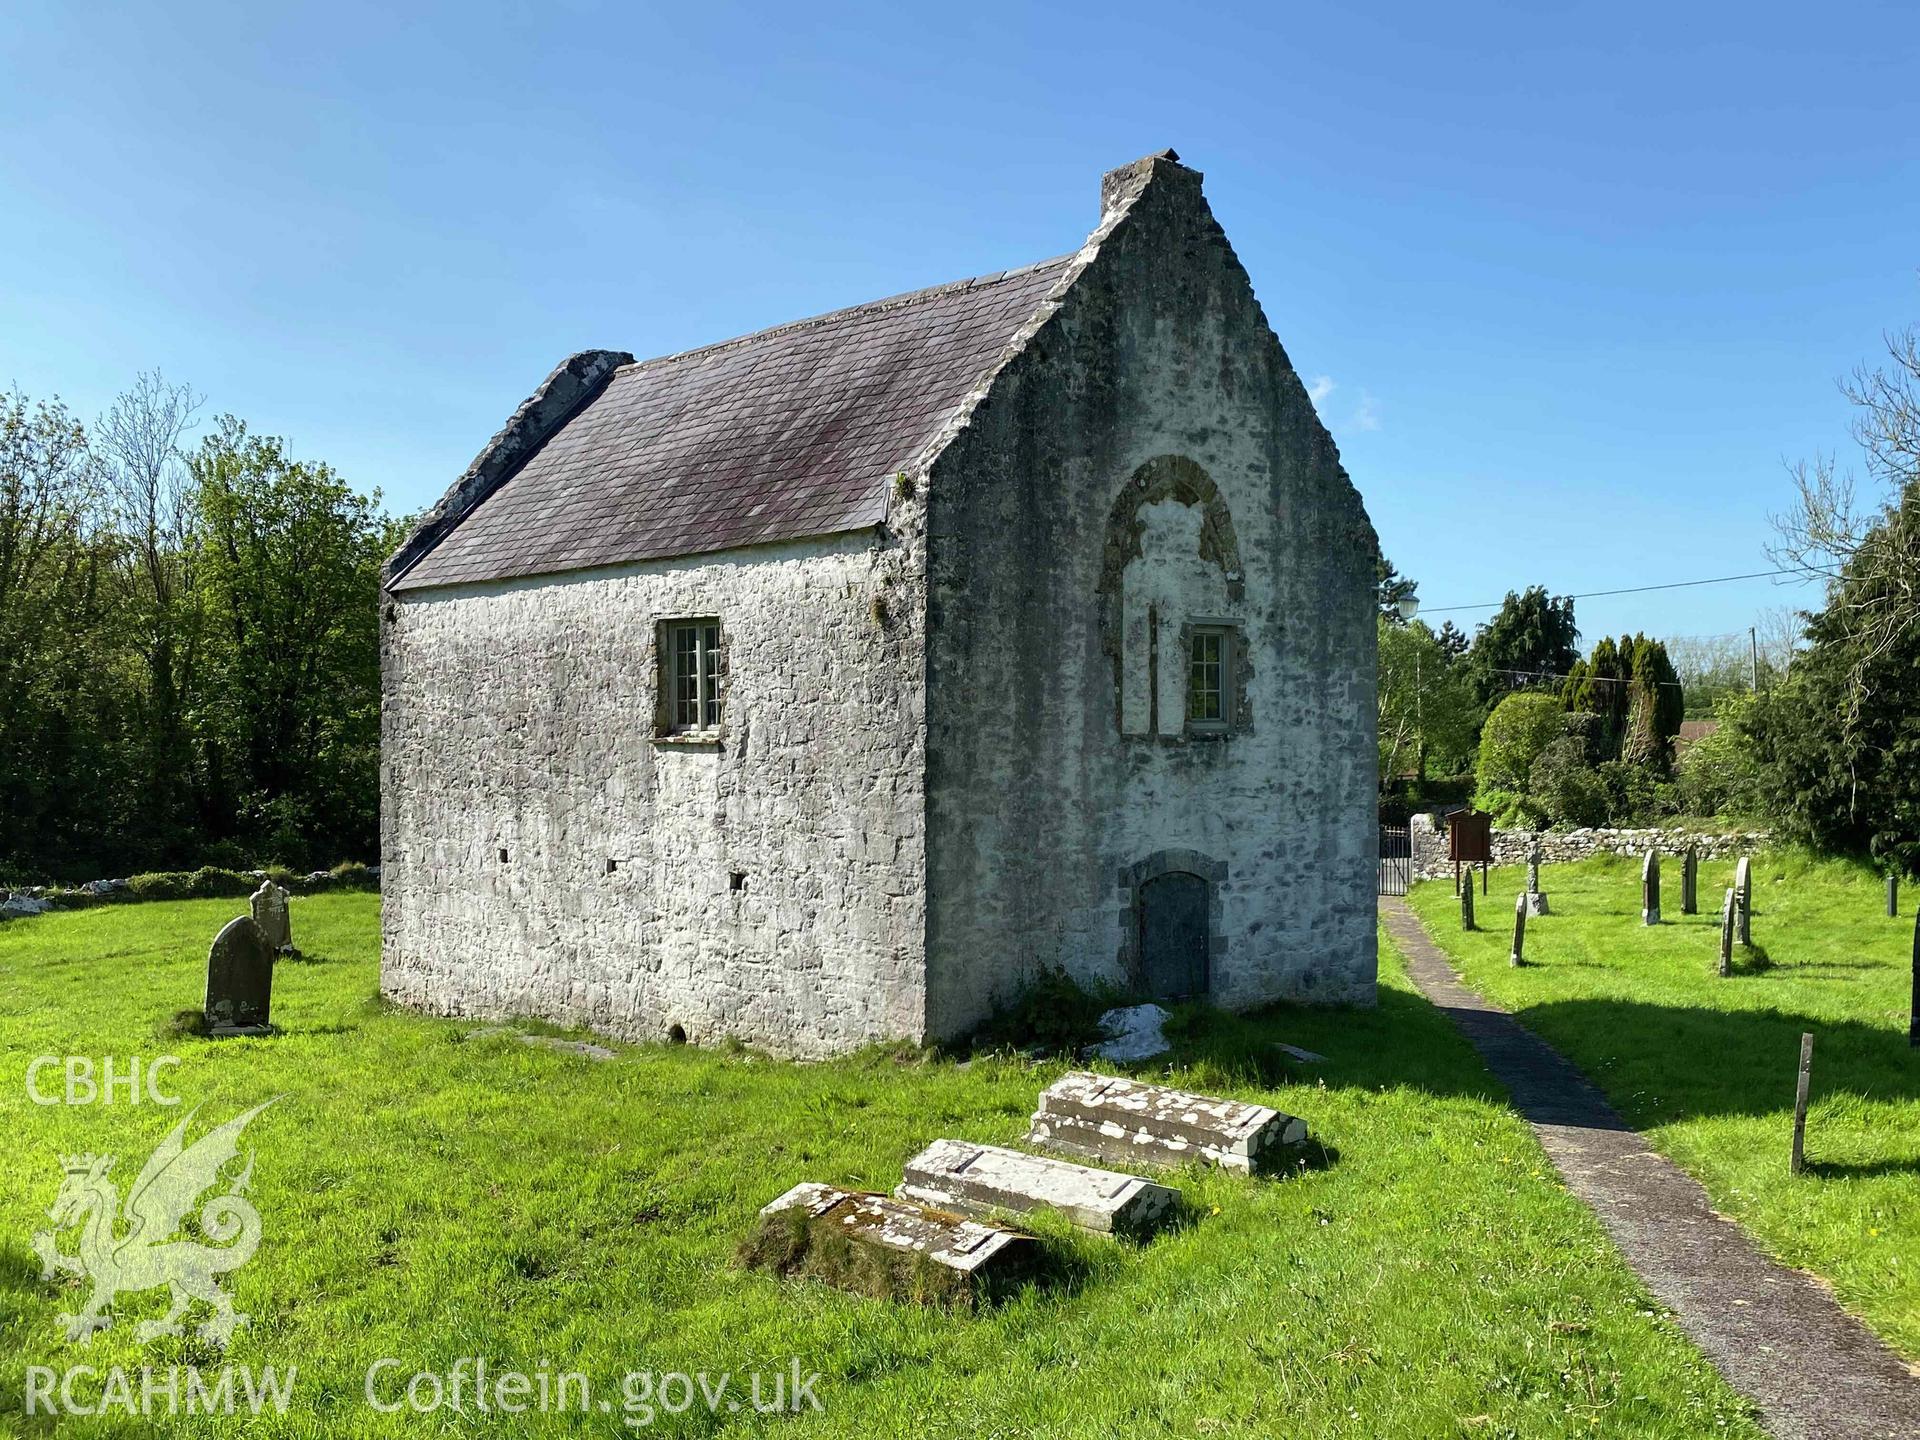 Digital photograph of Carew Cheriton Mortuary Chapel, produced by Paul Davis in 2023